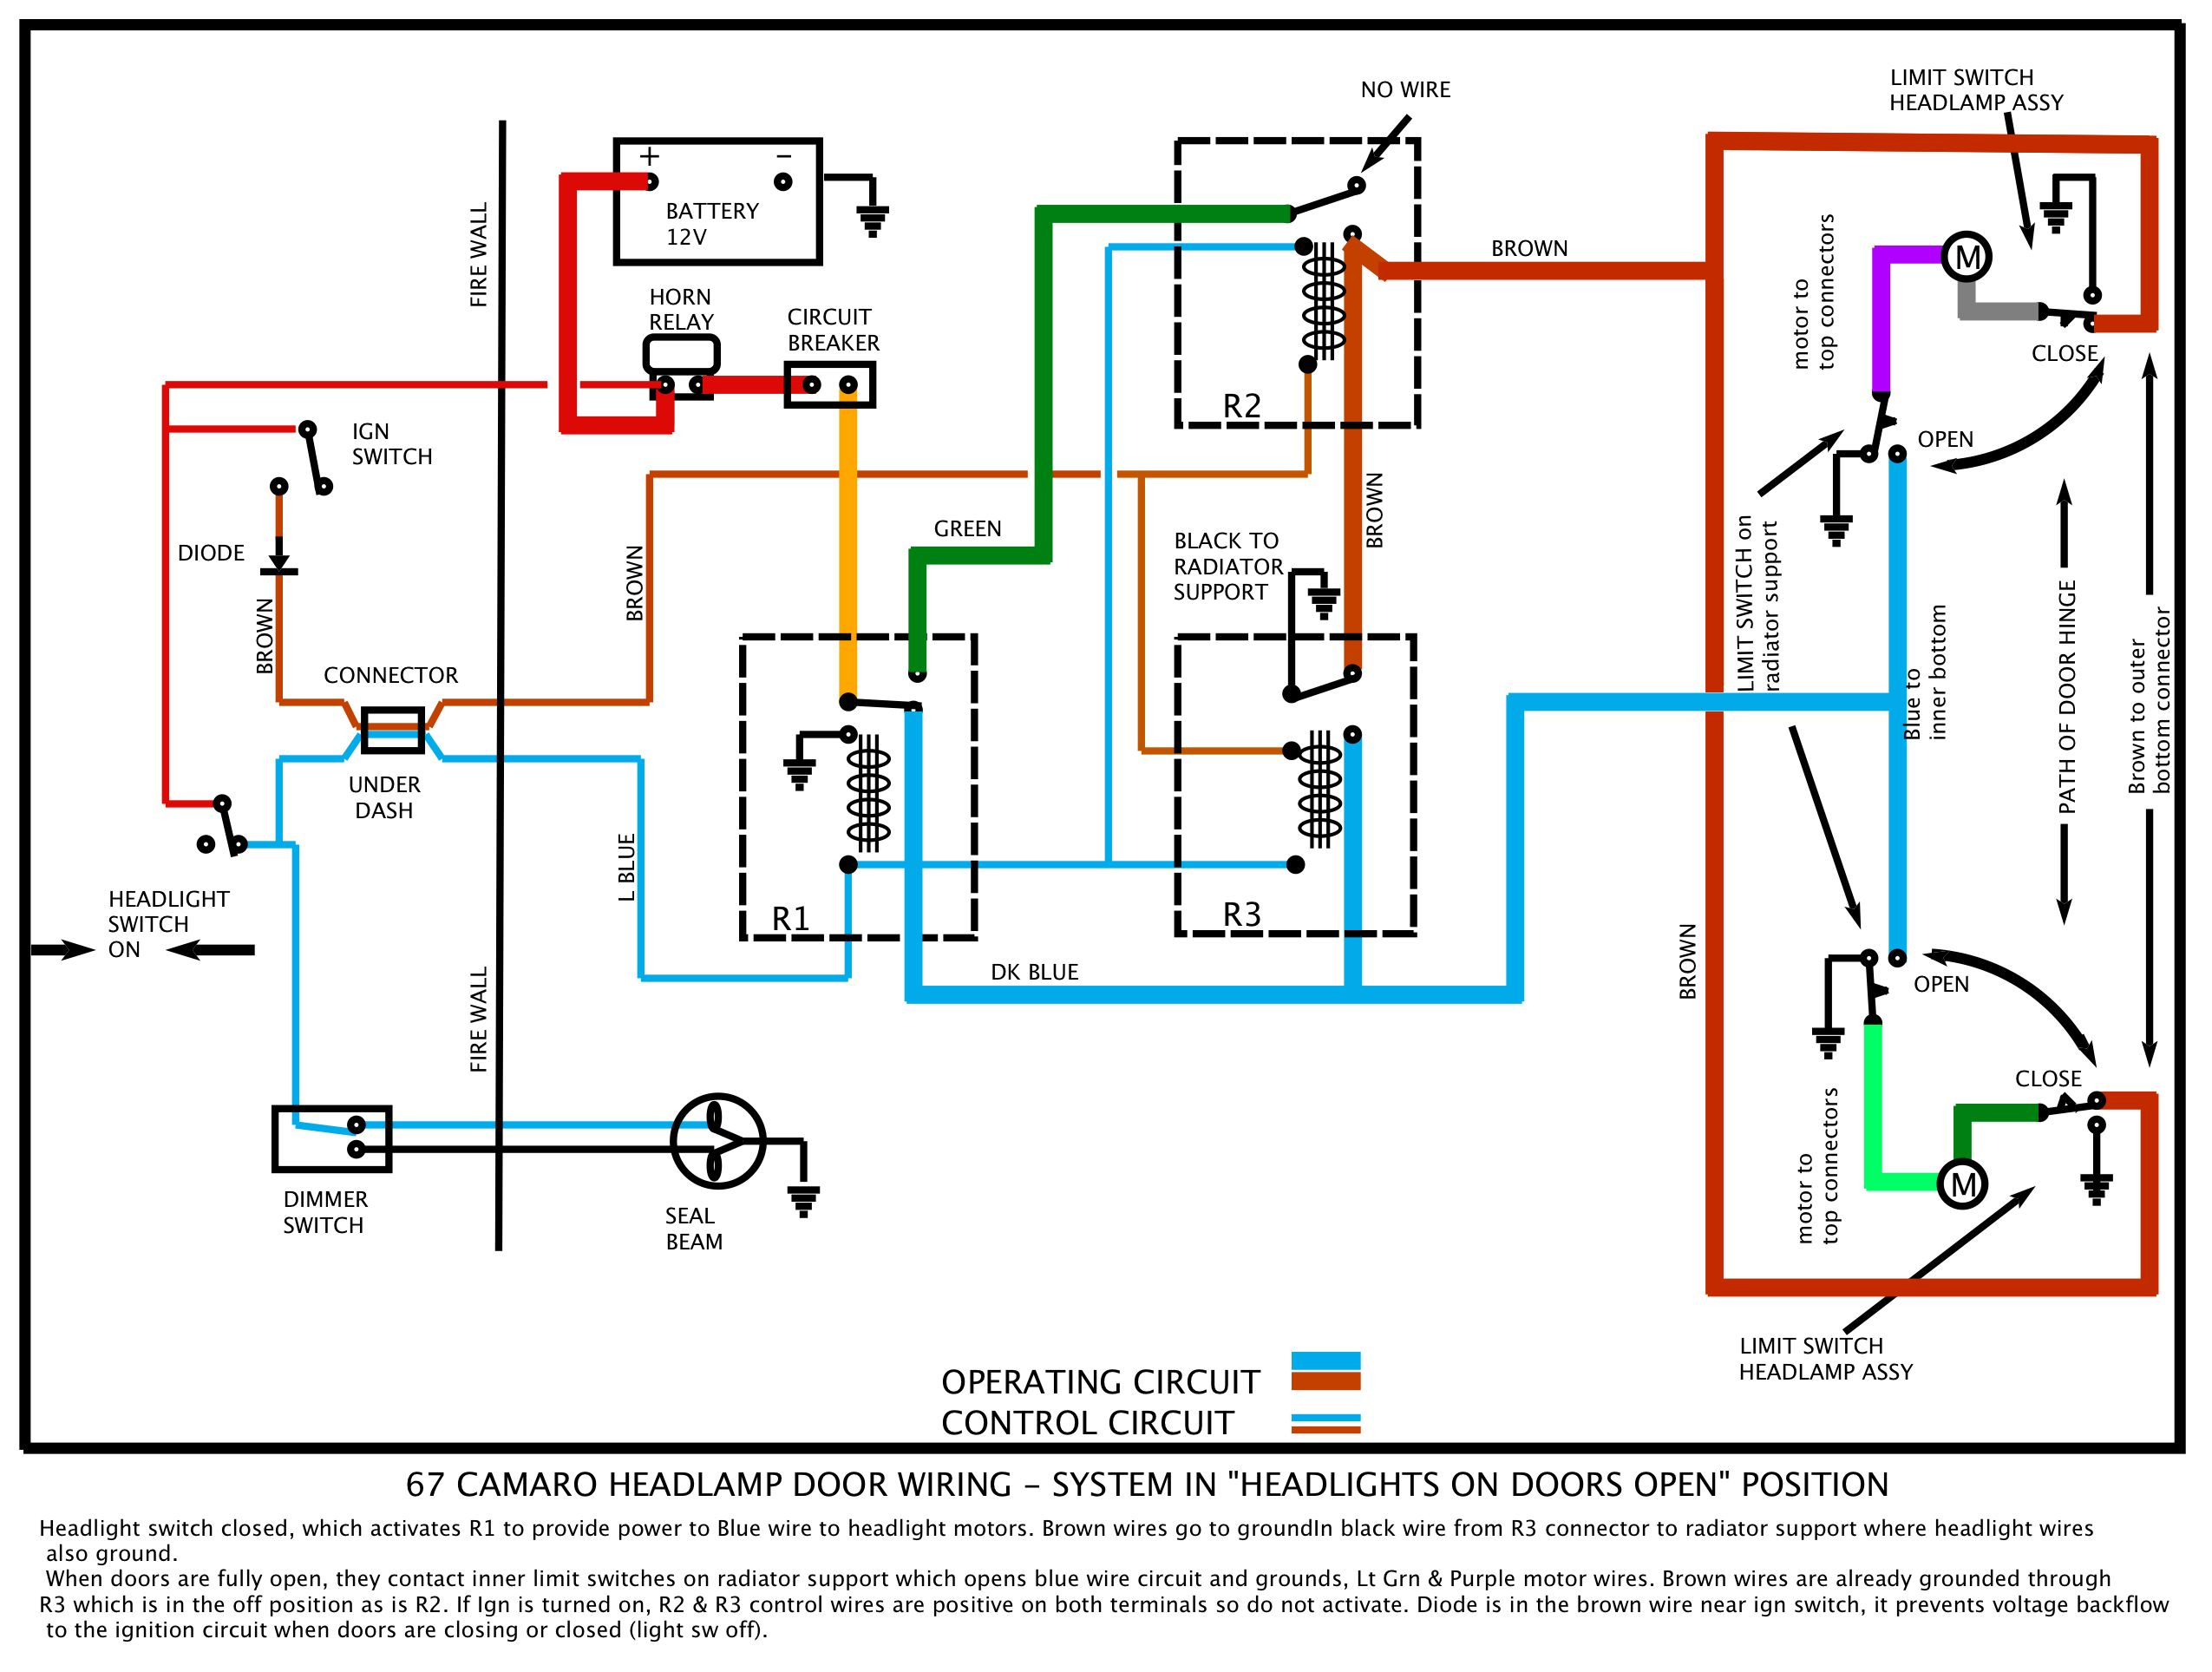 Headlight Wiring Diagram - Wiring Diagram Explained - Headlight Switch Wiring Diagram